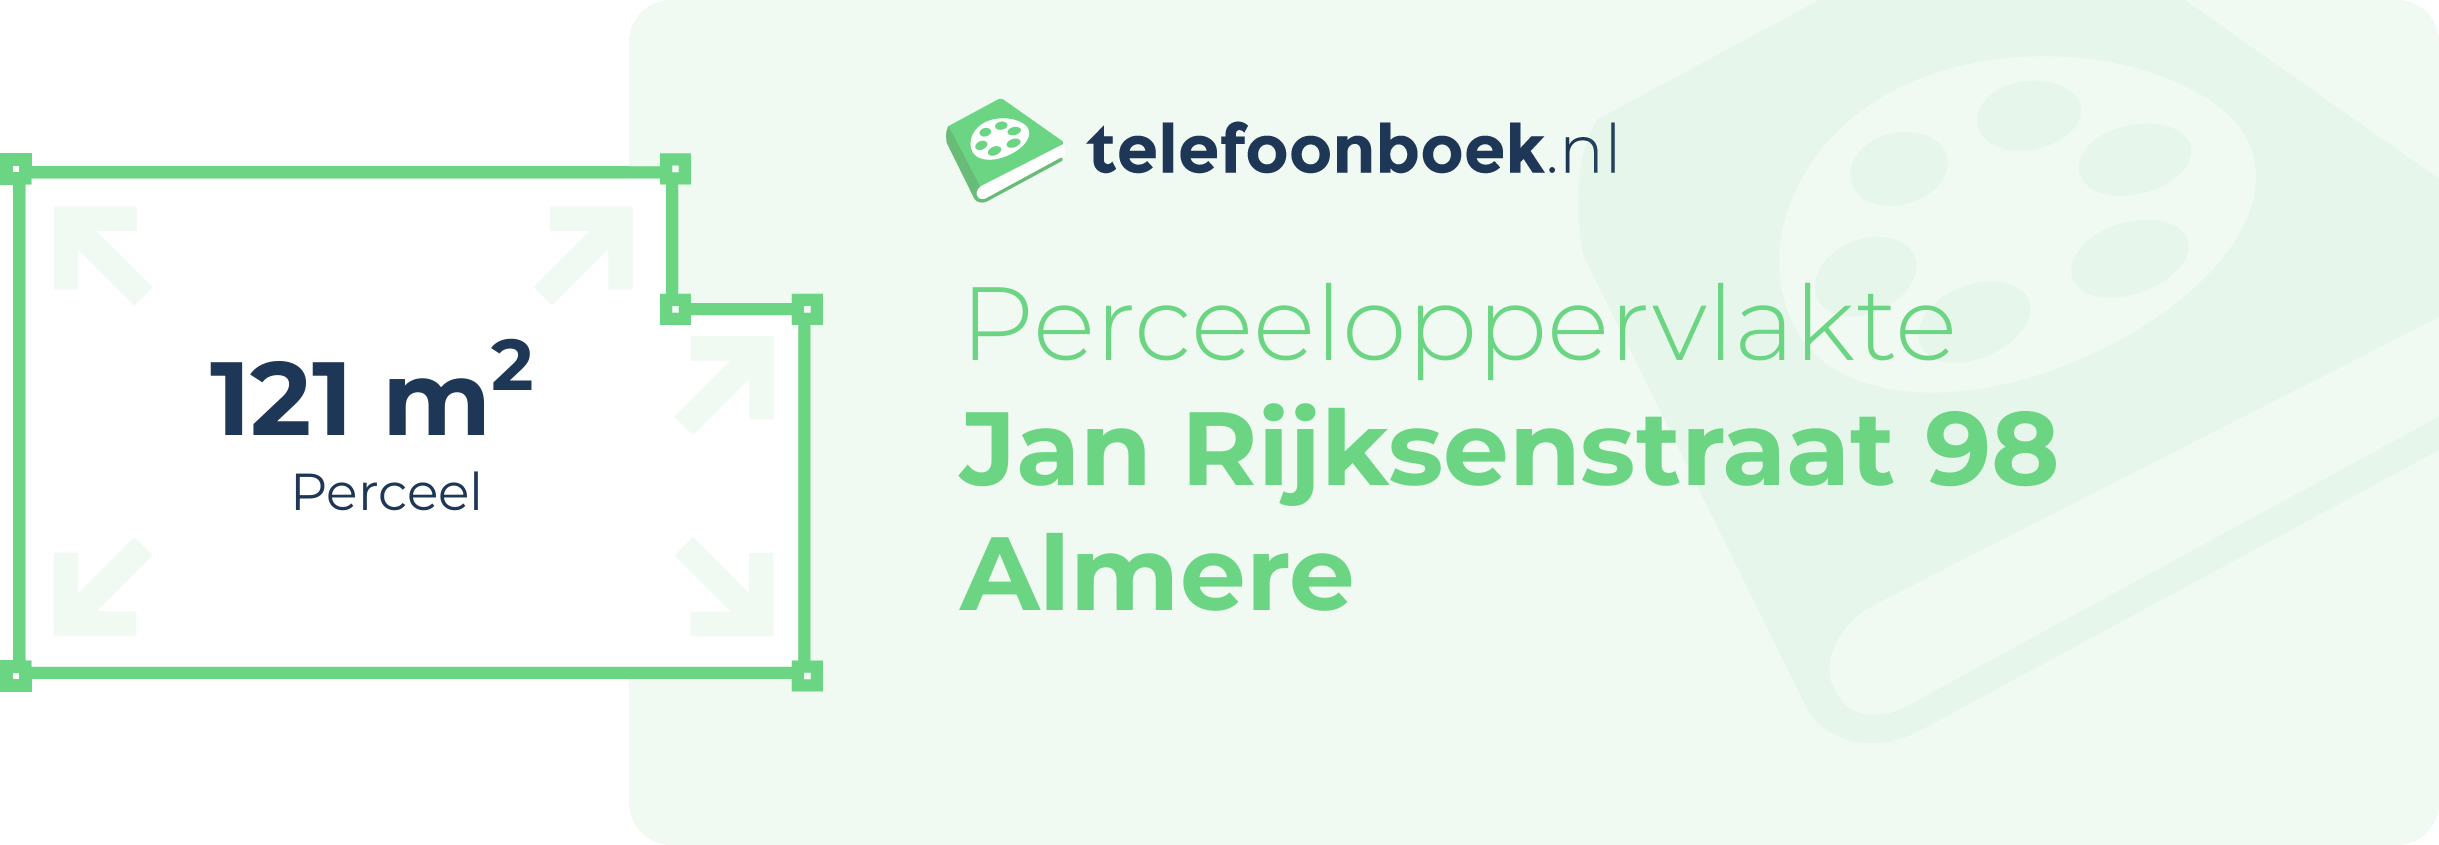 Perceeloppervlakte Jan Rijksenstraat 98 Almere